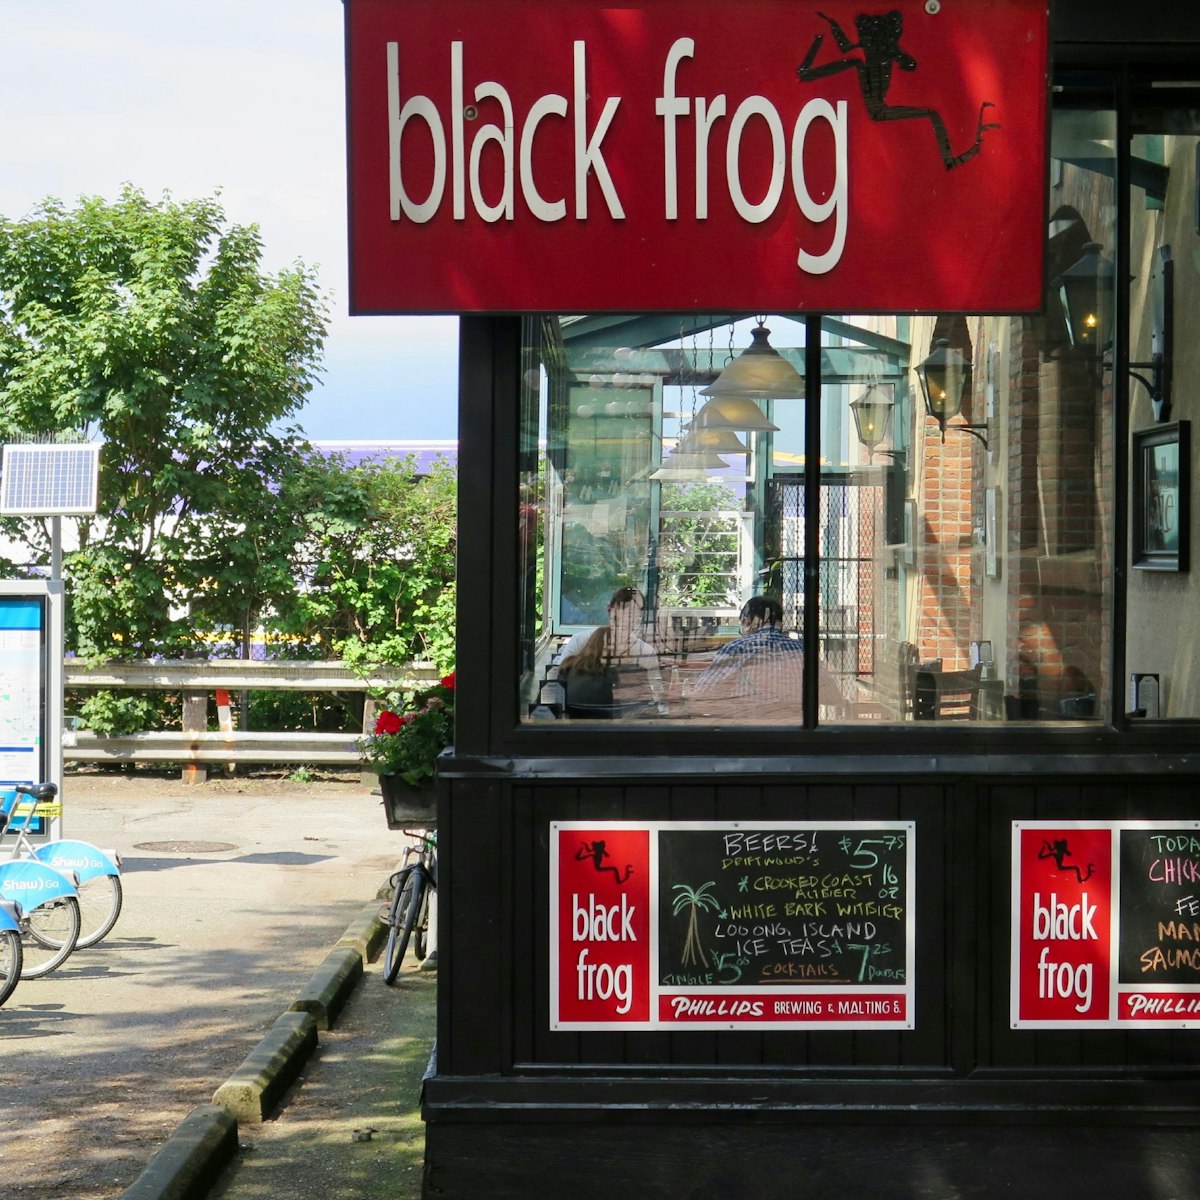 Exterior of the Black Frog pub